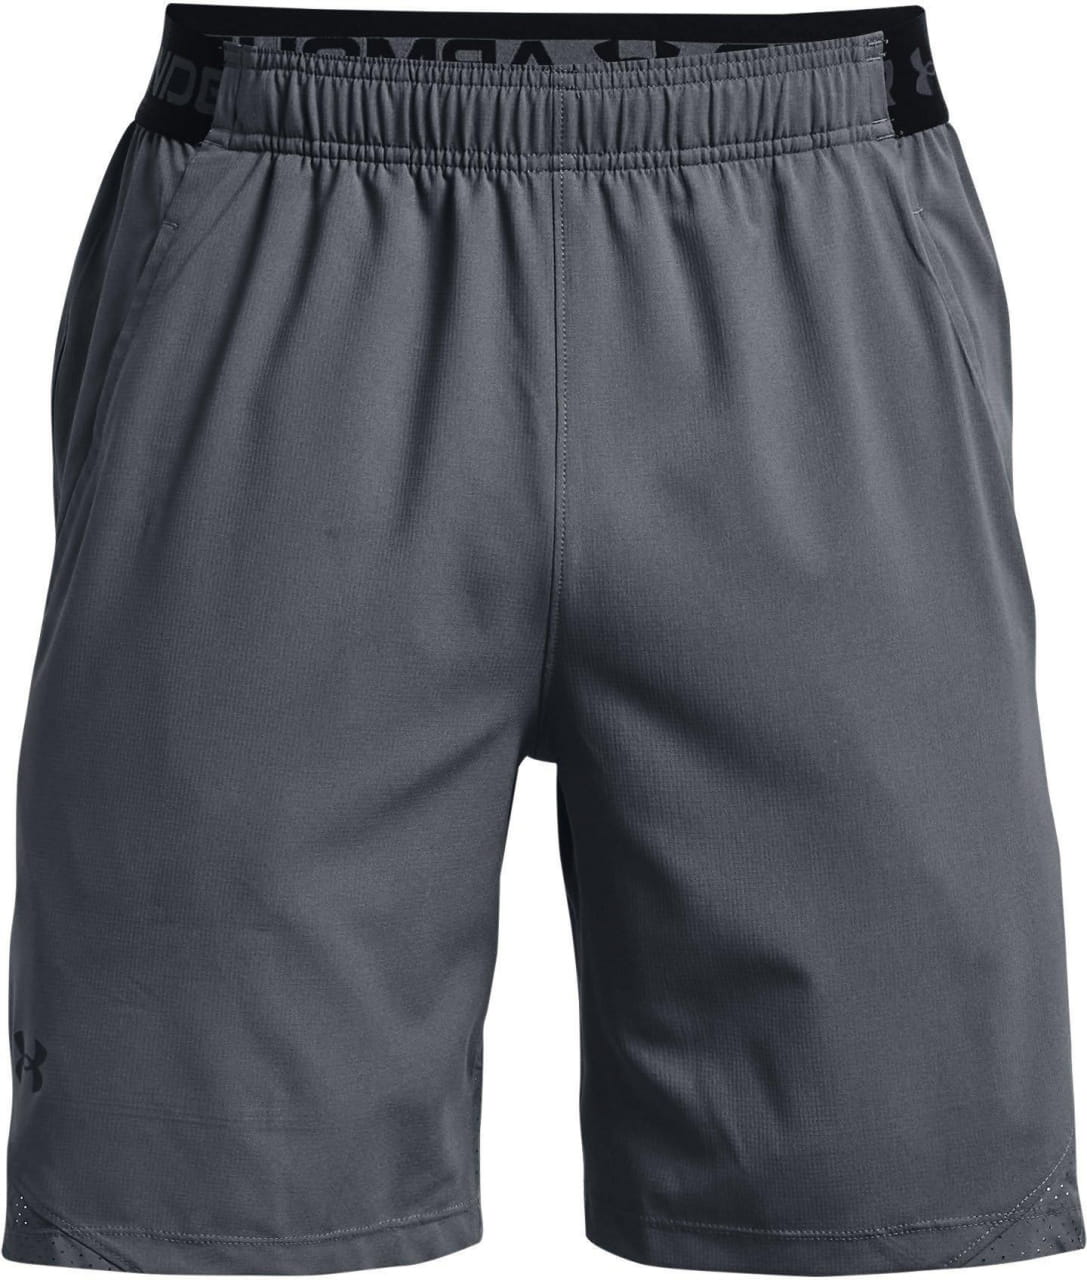 Pantaloni scurți sport pentru bărbați Under Armour Vanish Woven 8in Shorts-GRY